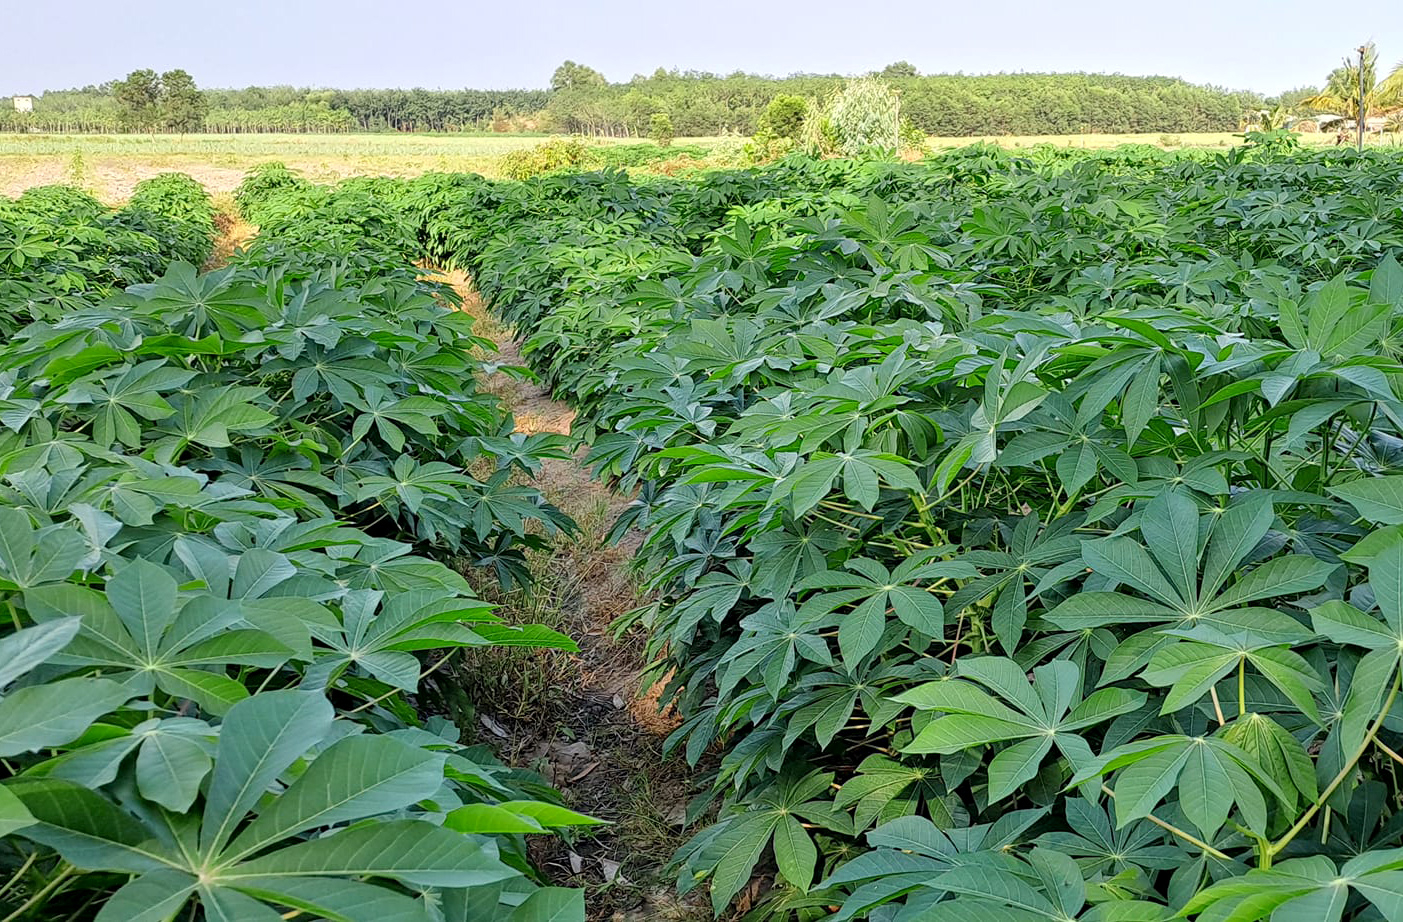 A cassava field in Tay Ninh province. Photo: Son Trang.